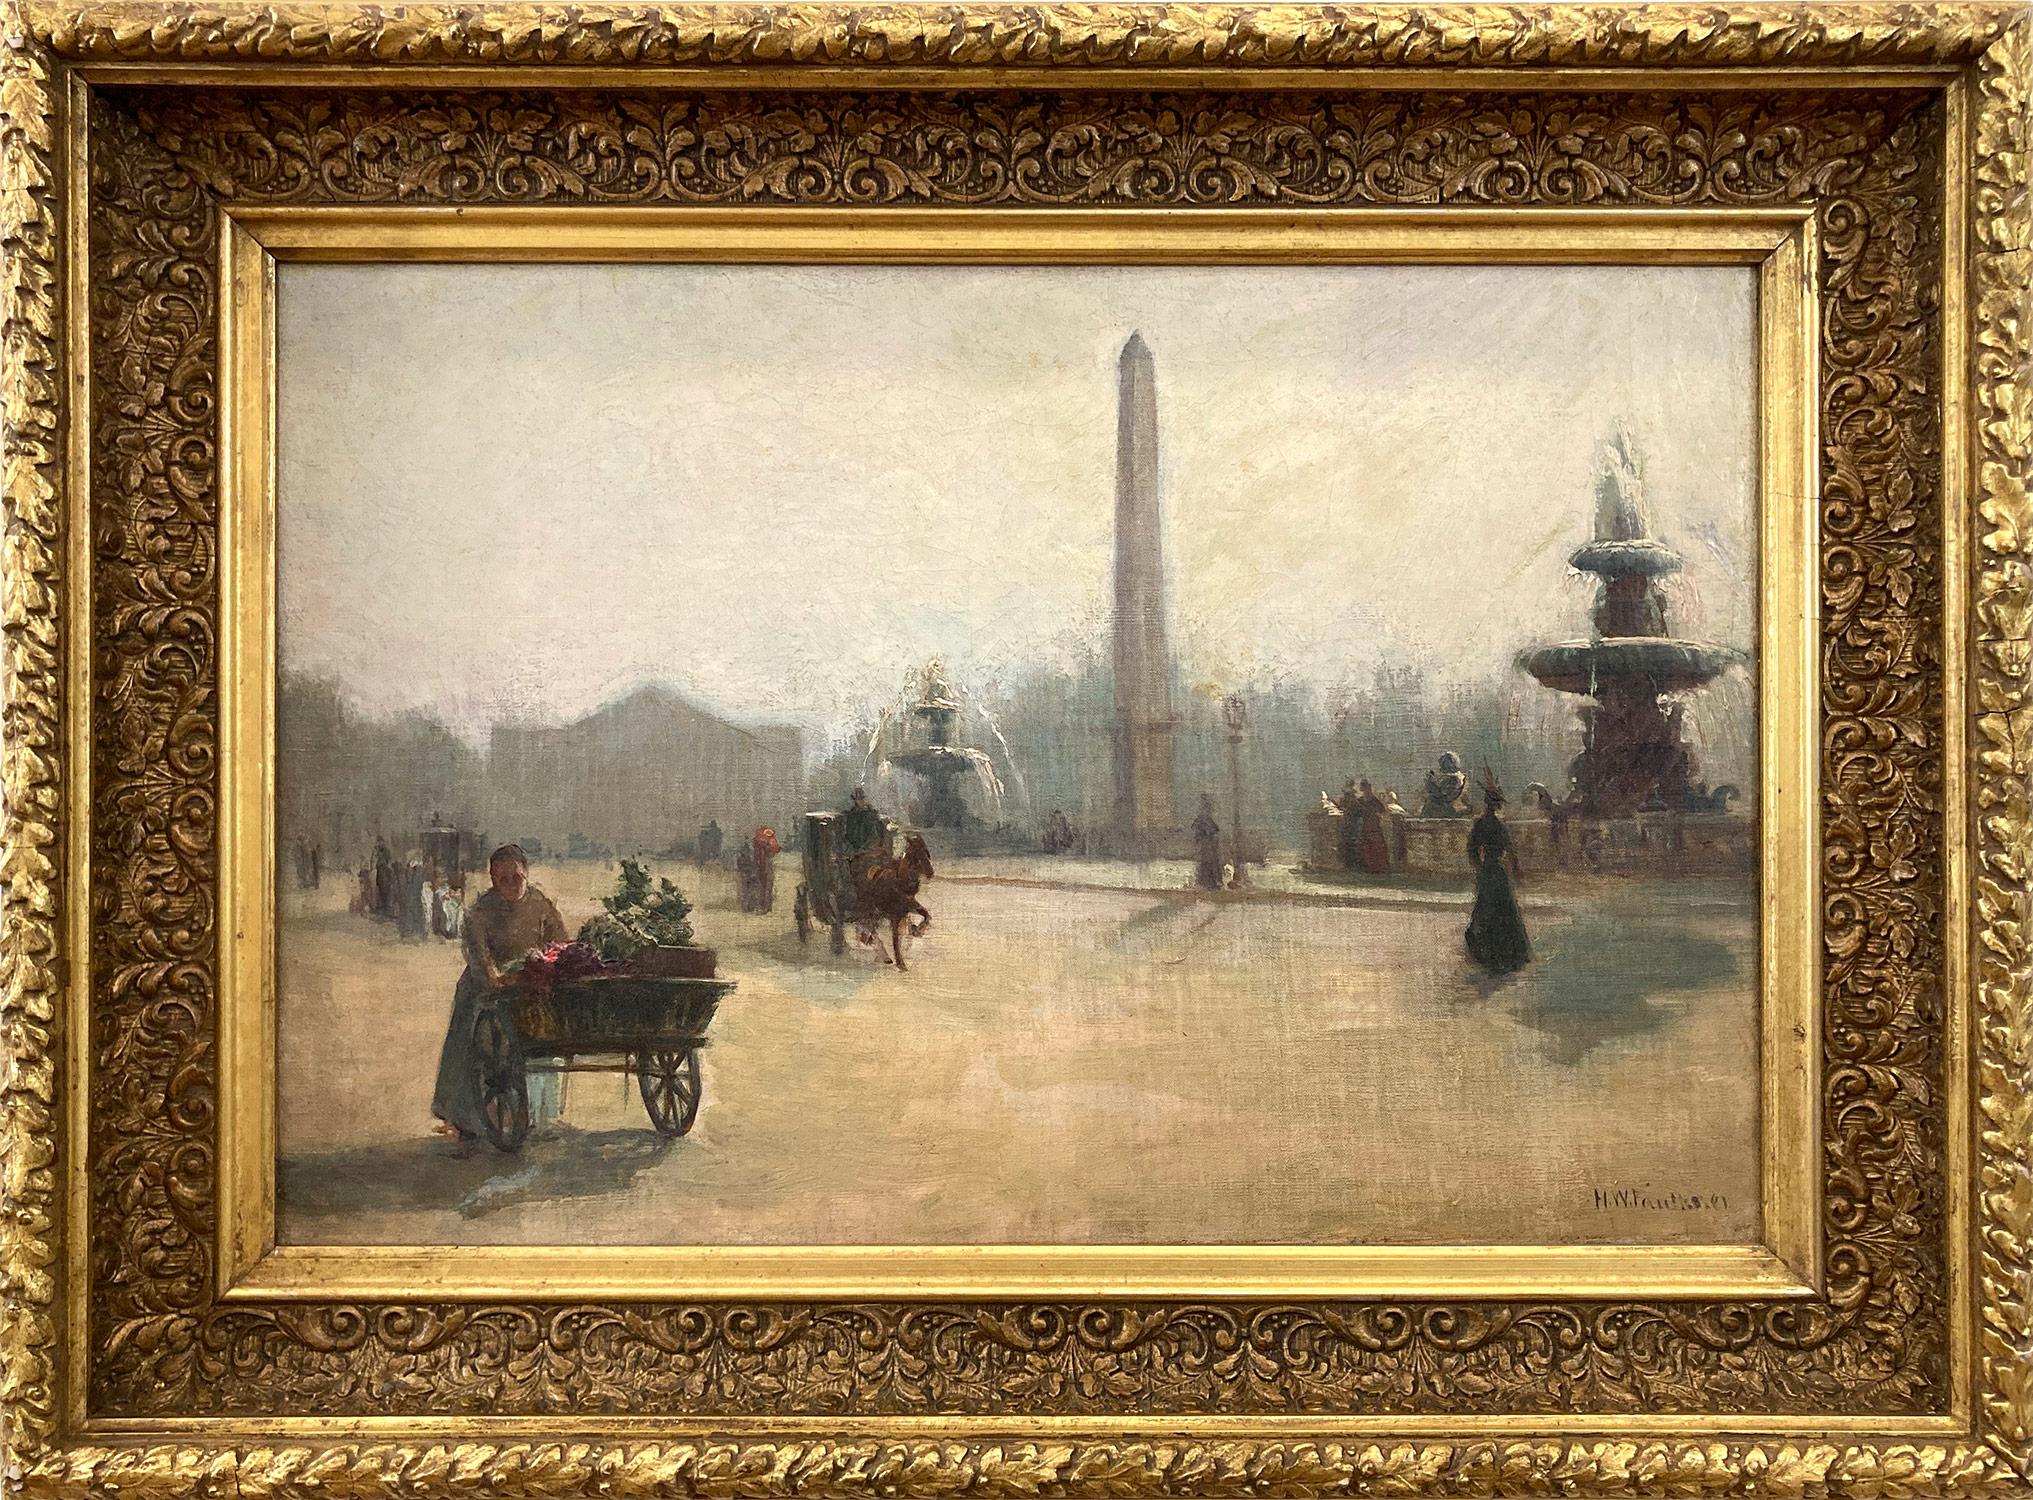 Herbert Waldron Faulkner Landscape Painting - "Place de la Concord" French Impressionist Parisian Street Scene Oil on Canvas